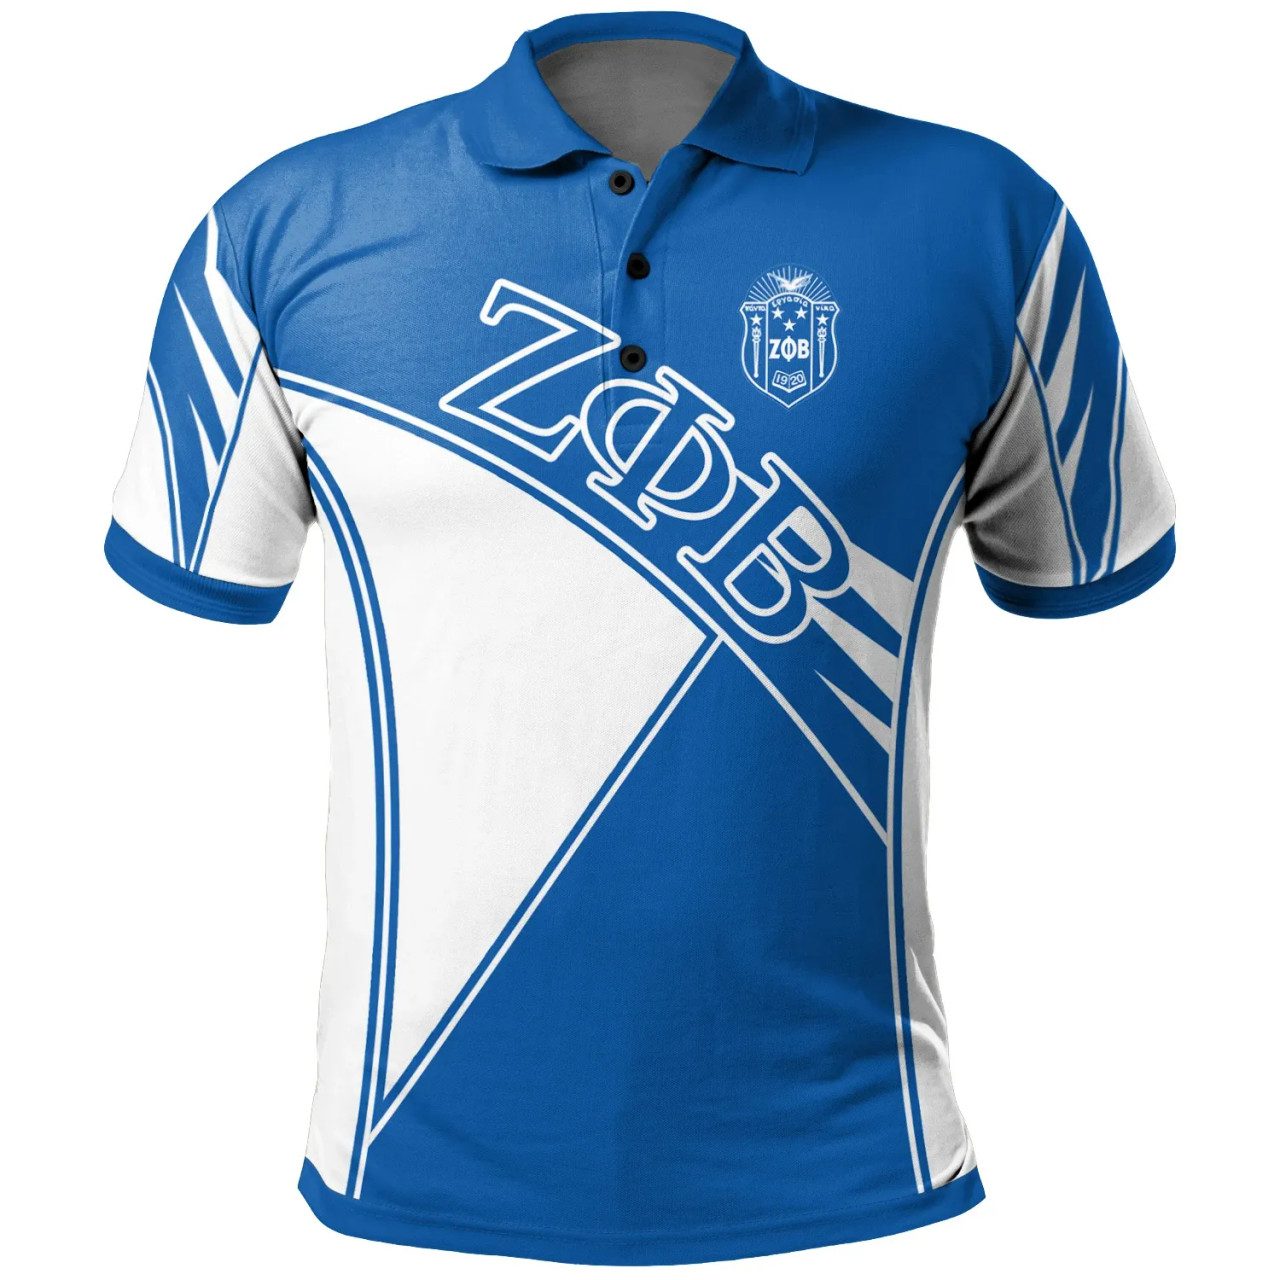 Zeta Phi Beta Polo Shirt – Sorority Spirit Version Polo Shirt